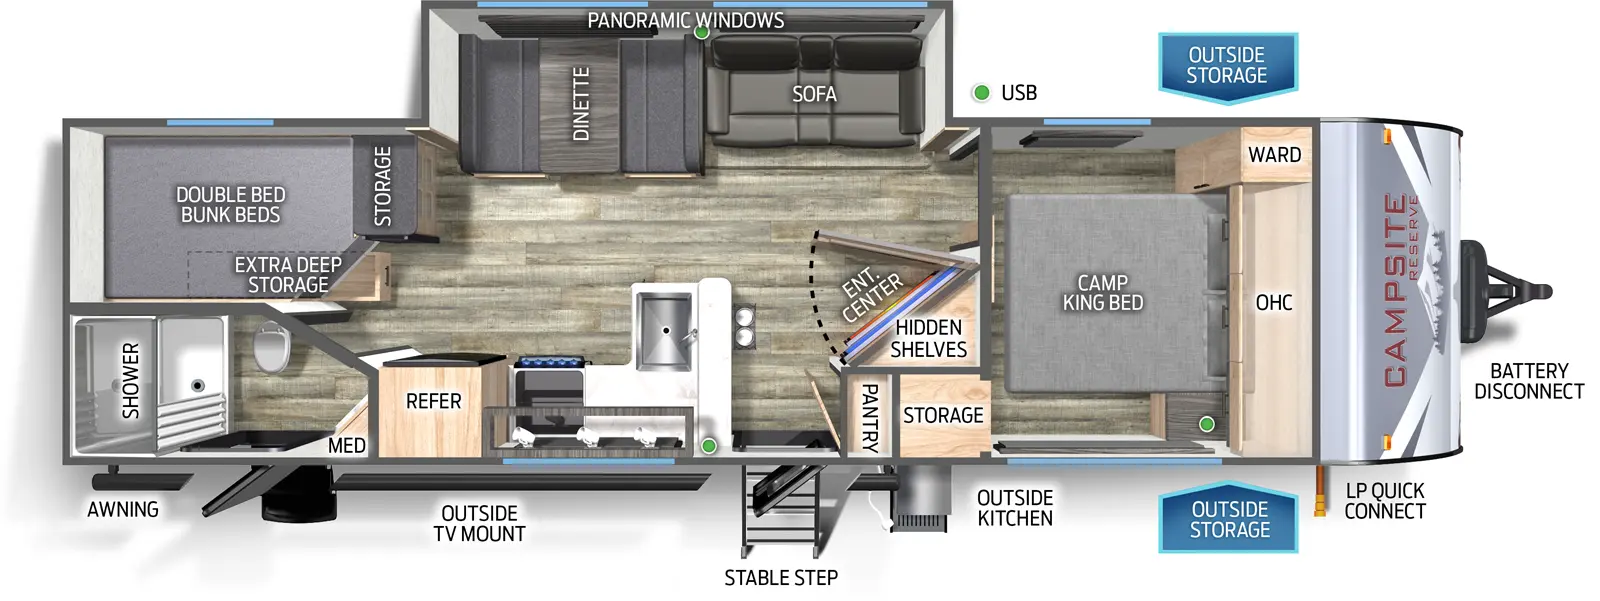 26CJ Floorplan Image